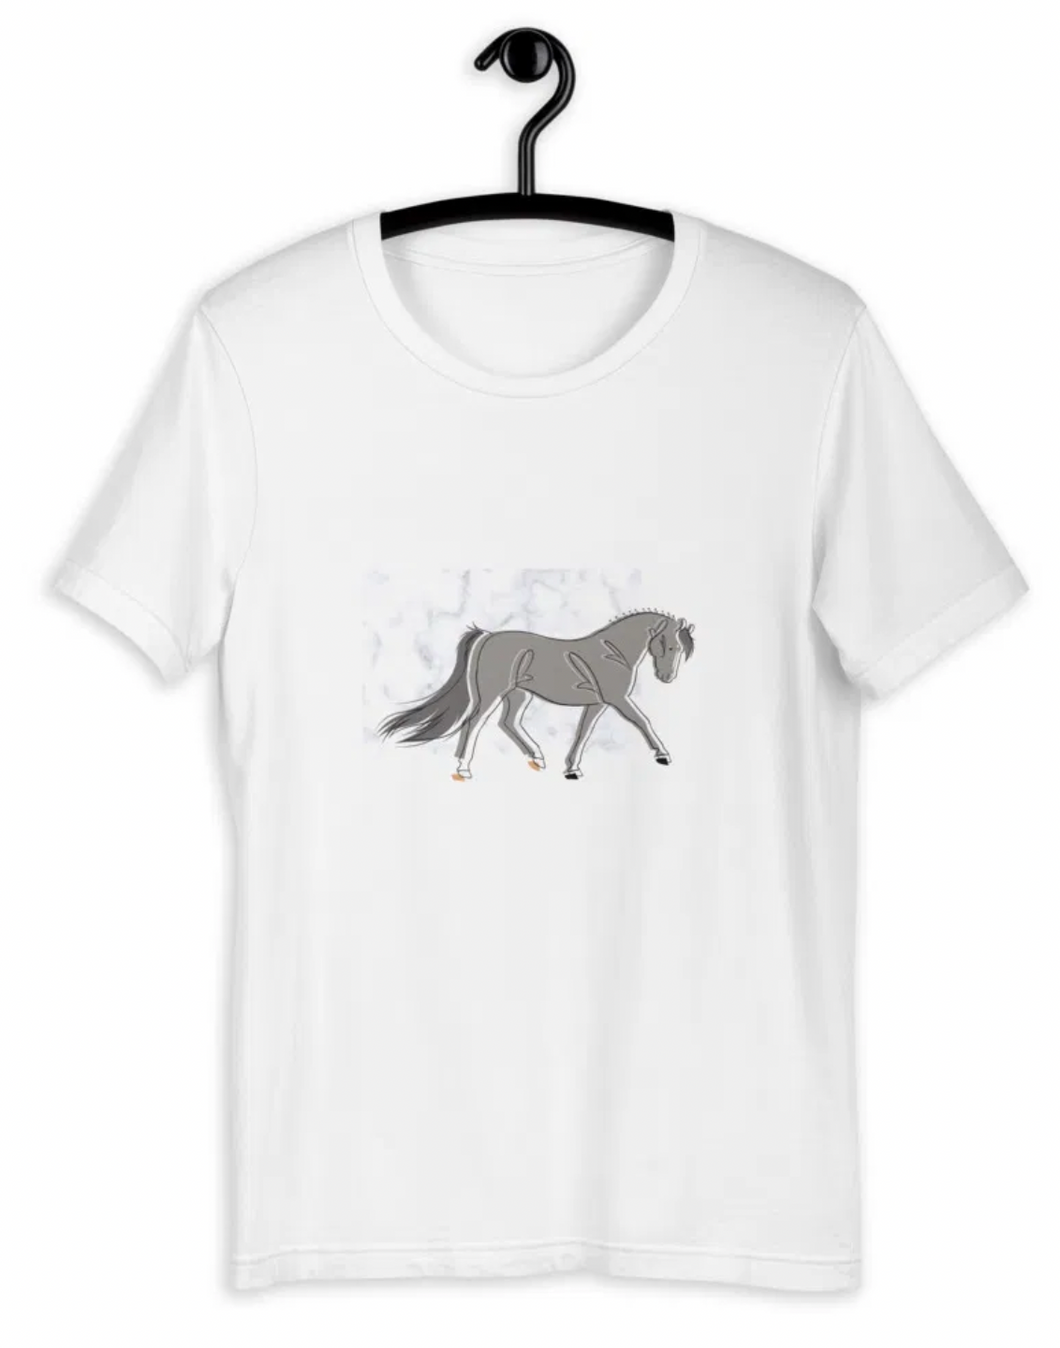 Collection équine - Tee shirt Luciole blanc